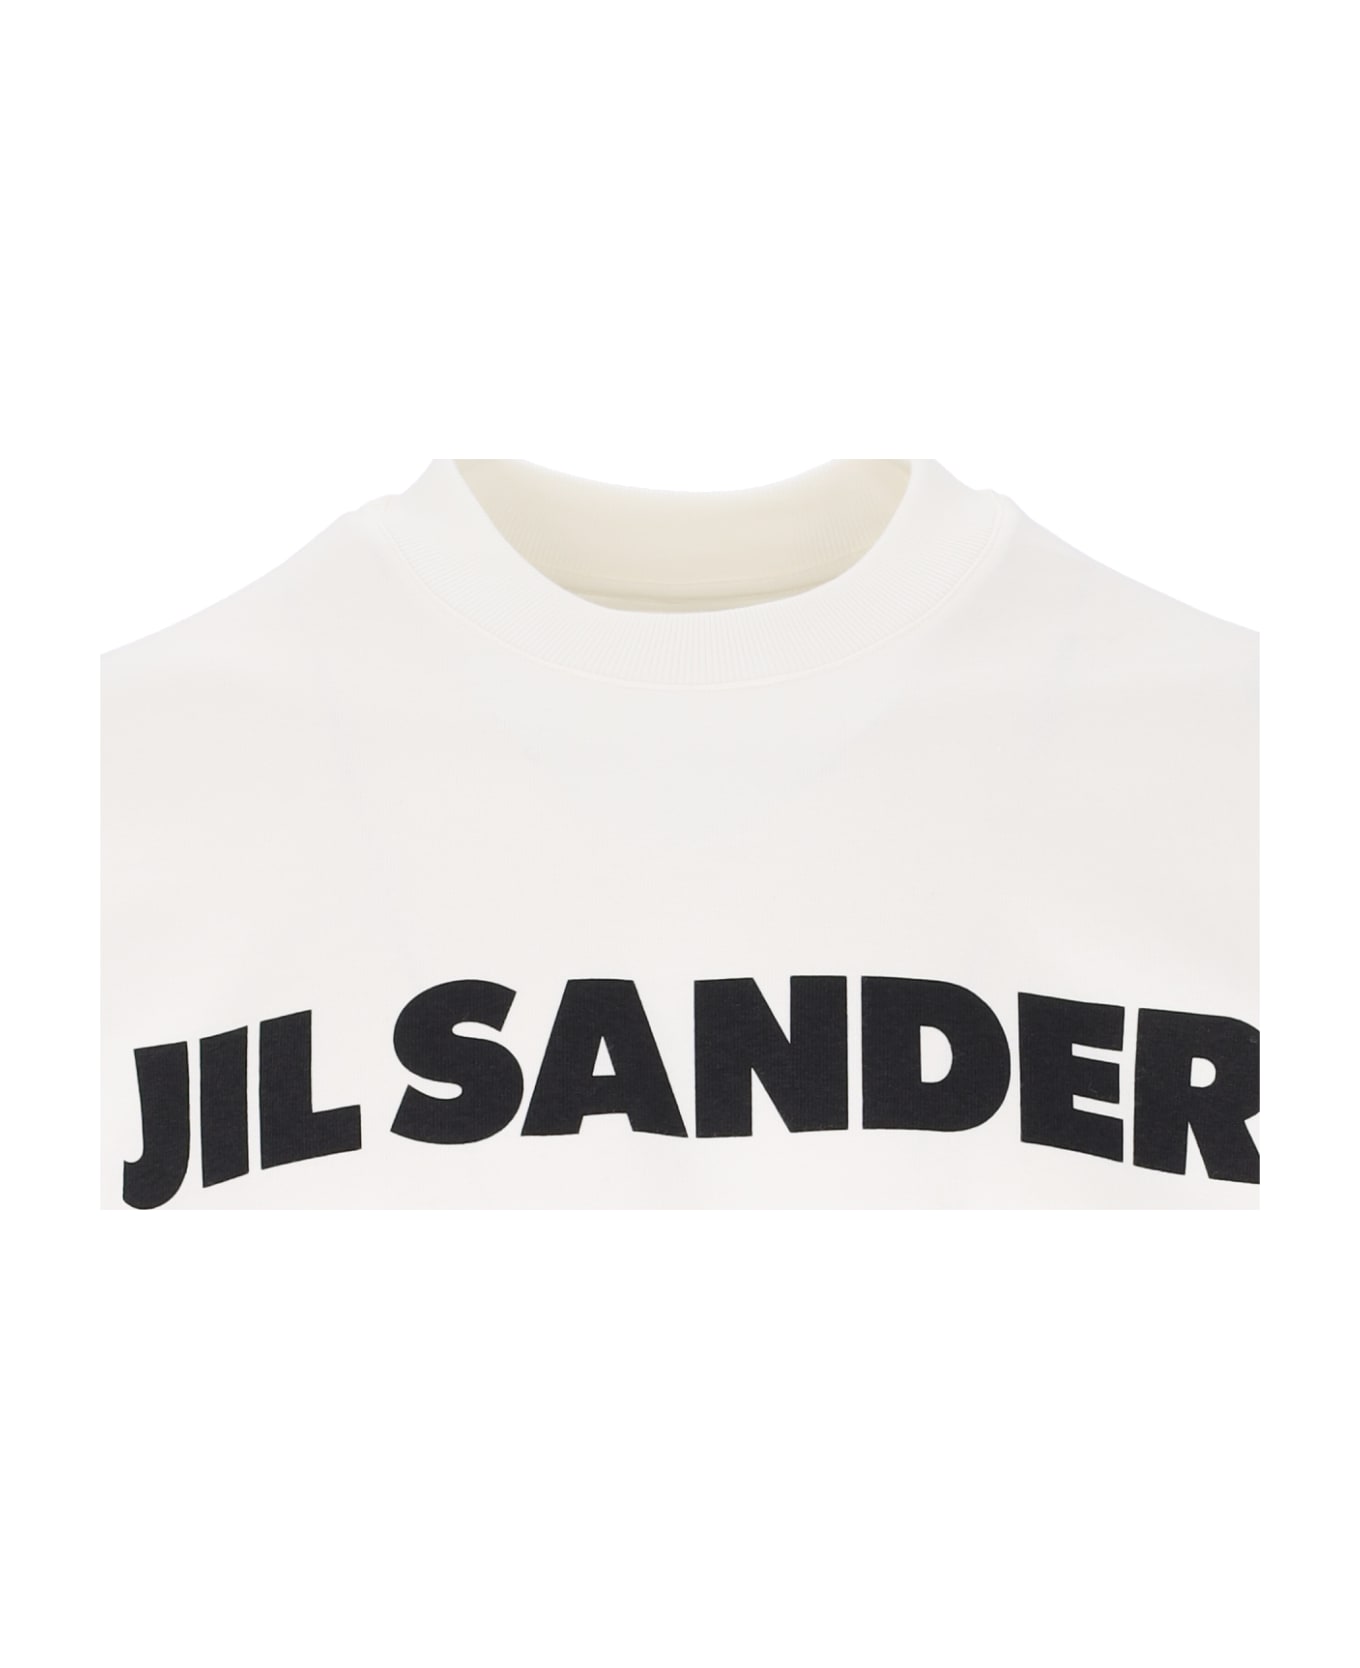 Jil Sander Logo Sweatshirt - Porcelain